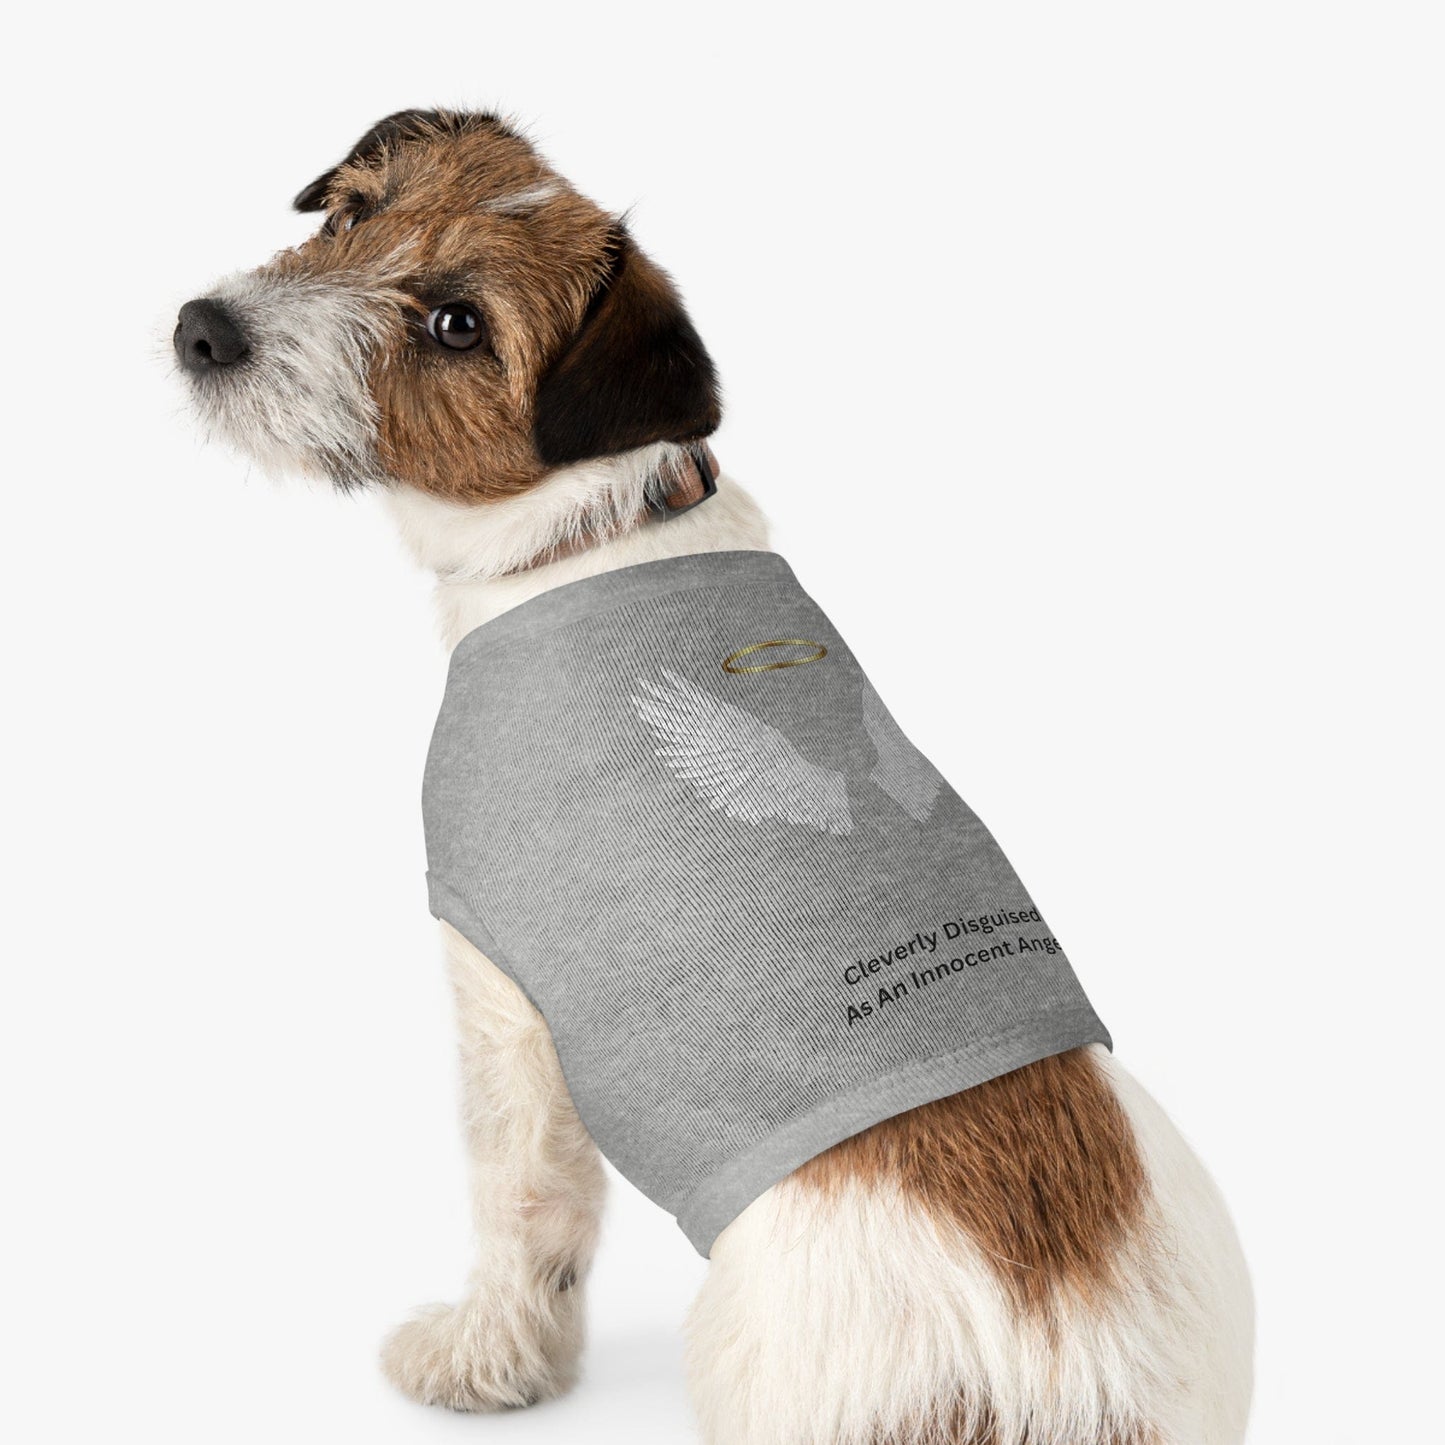 Angel Dog Shirt-Shirt For Dogs-Funny Dog Shirts-Custom Dog Shirts-Shirt For Cats